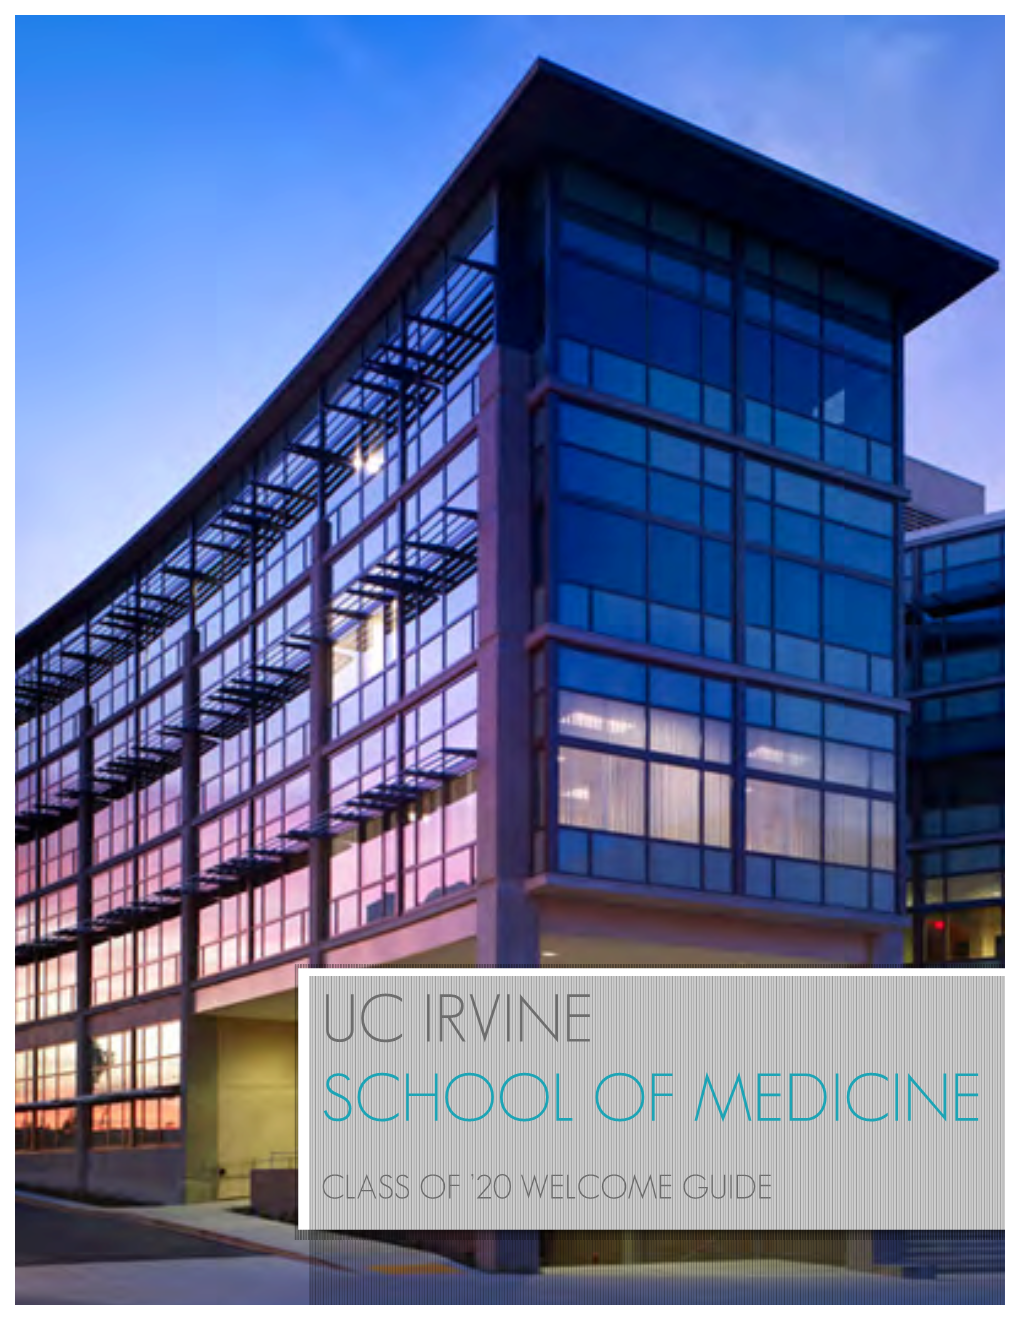 Uc Irvine School of Medicine